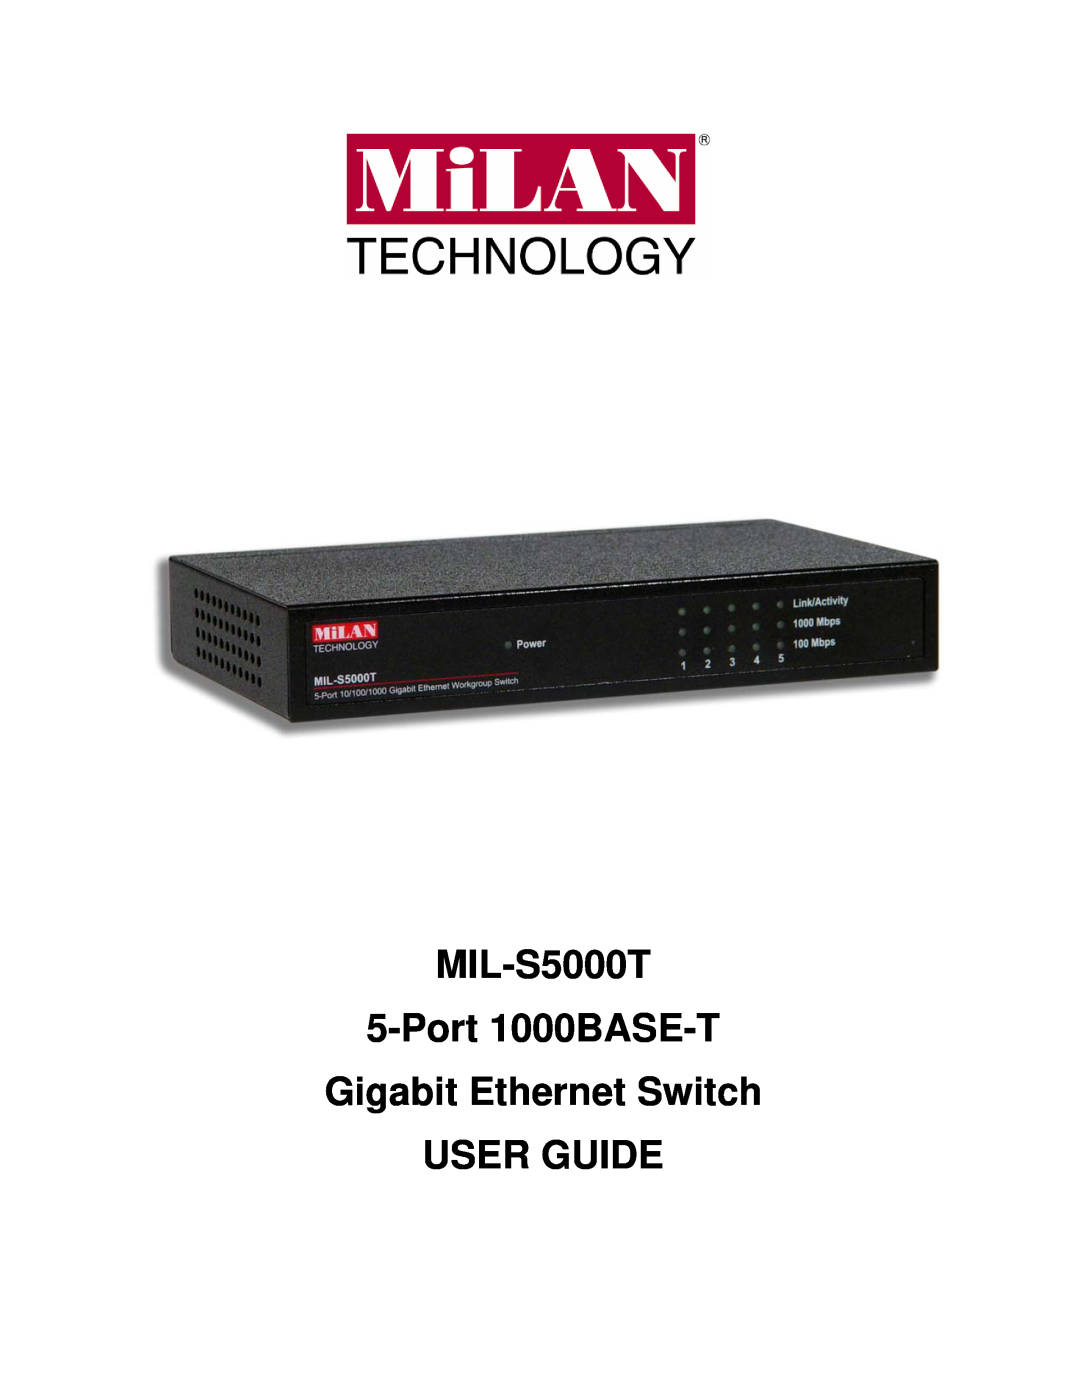 Milan Technology manual MIL-S5000T 5-Port 1000BASE-T, Gigabit Ethernet Switch USER GUIDE 